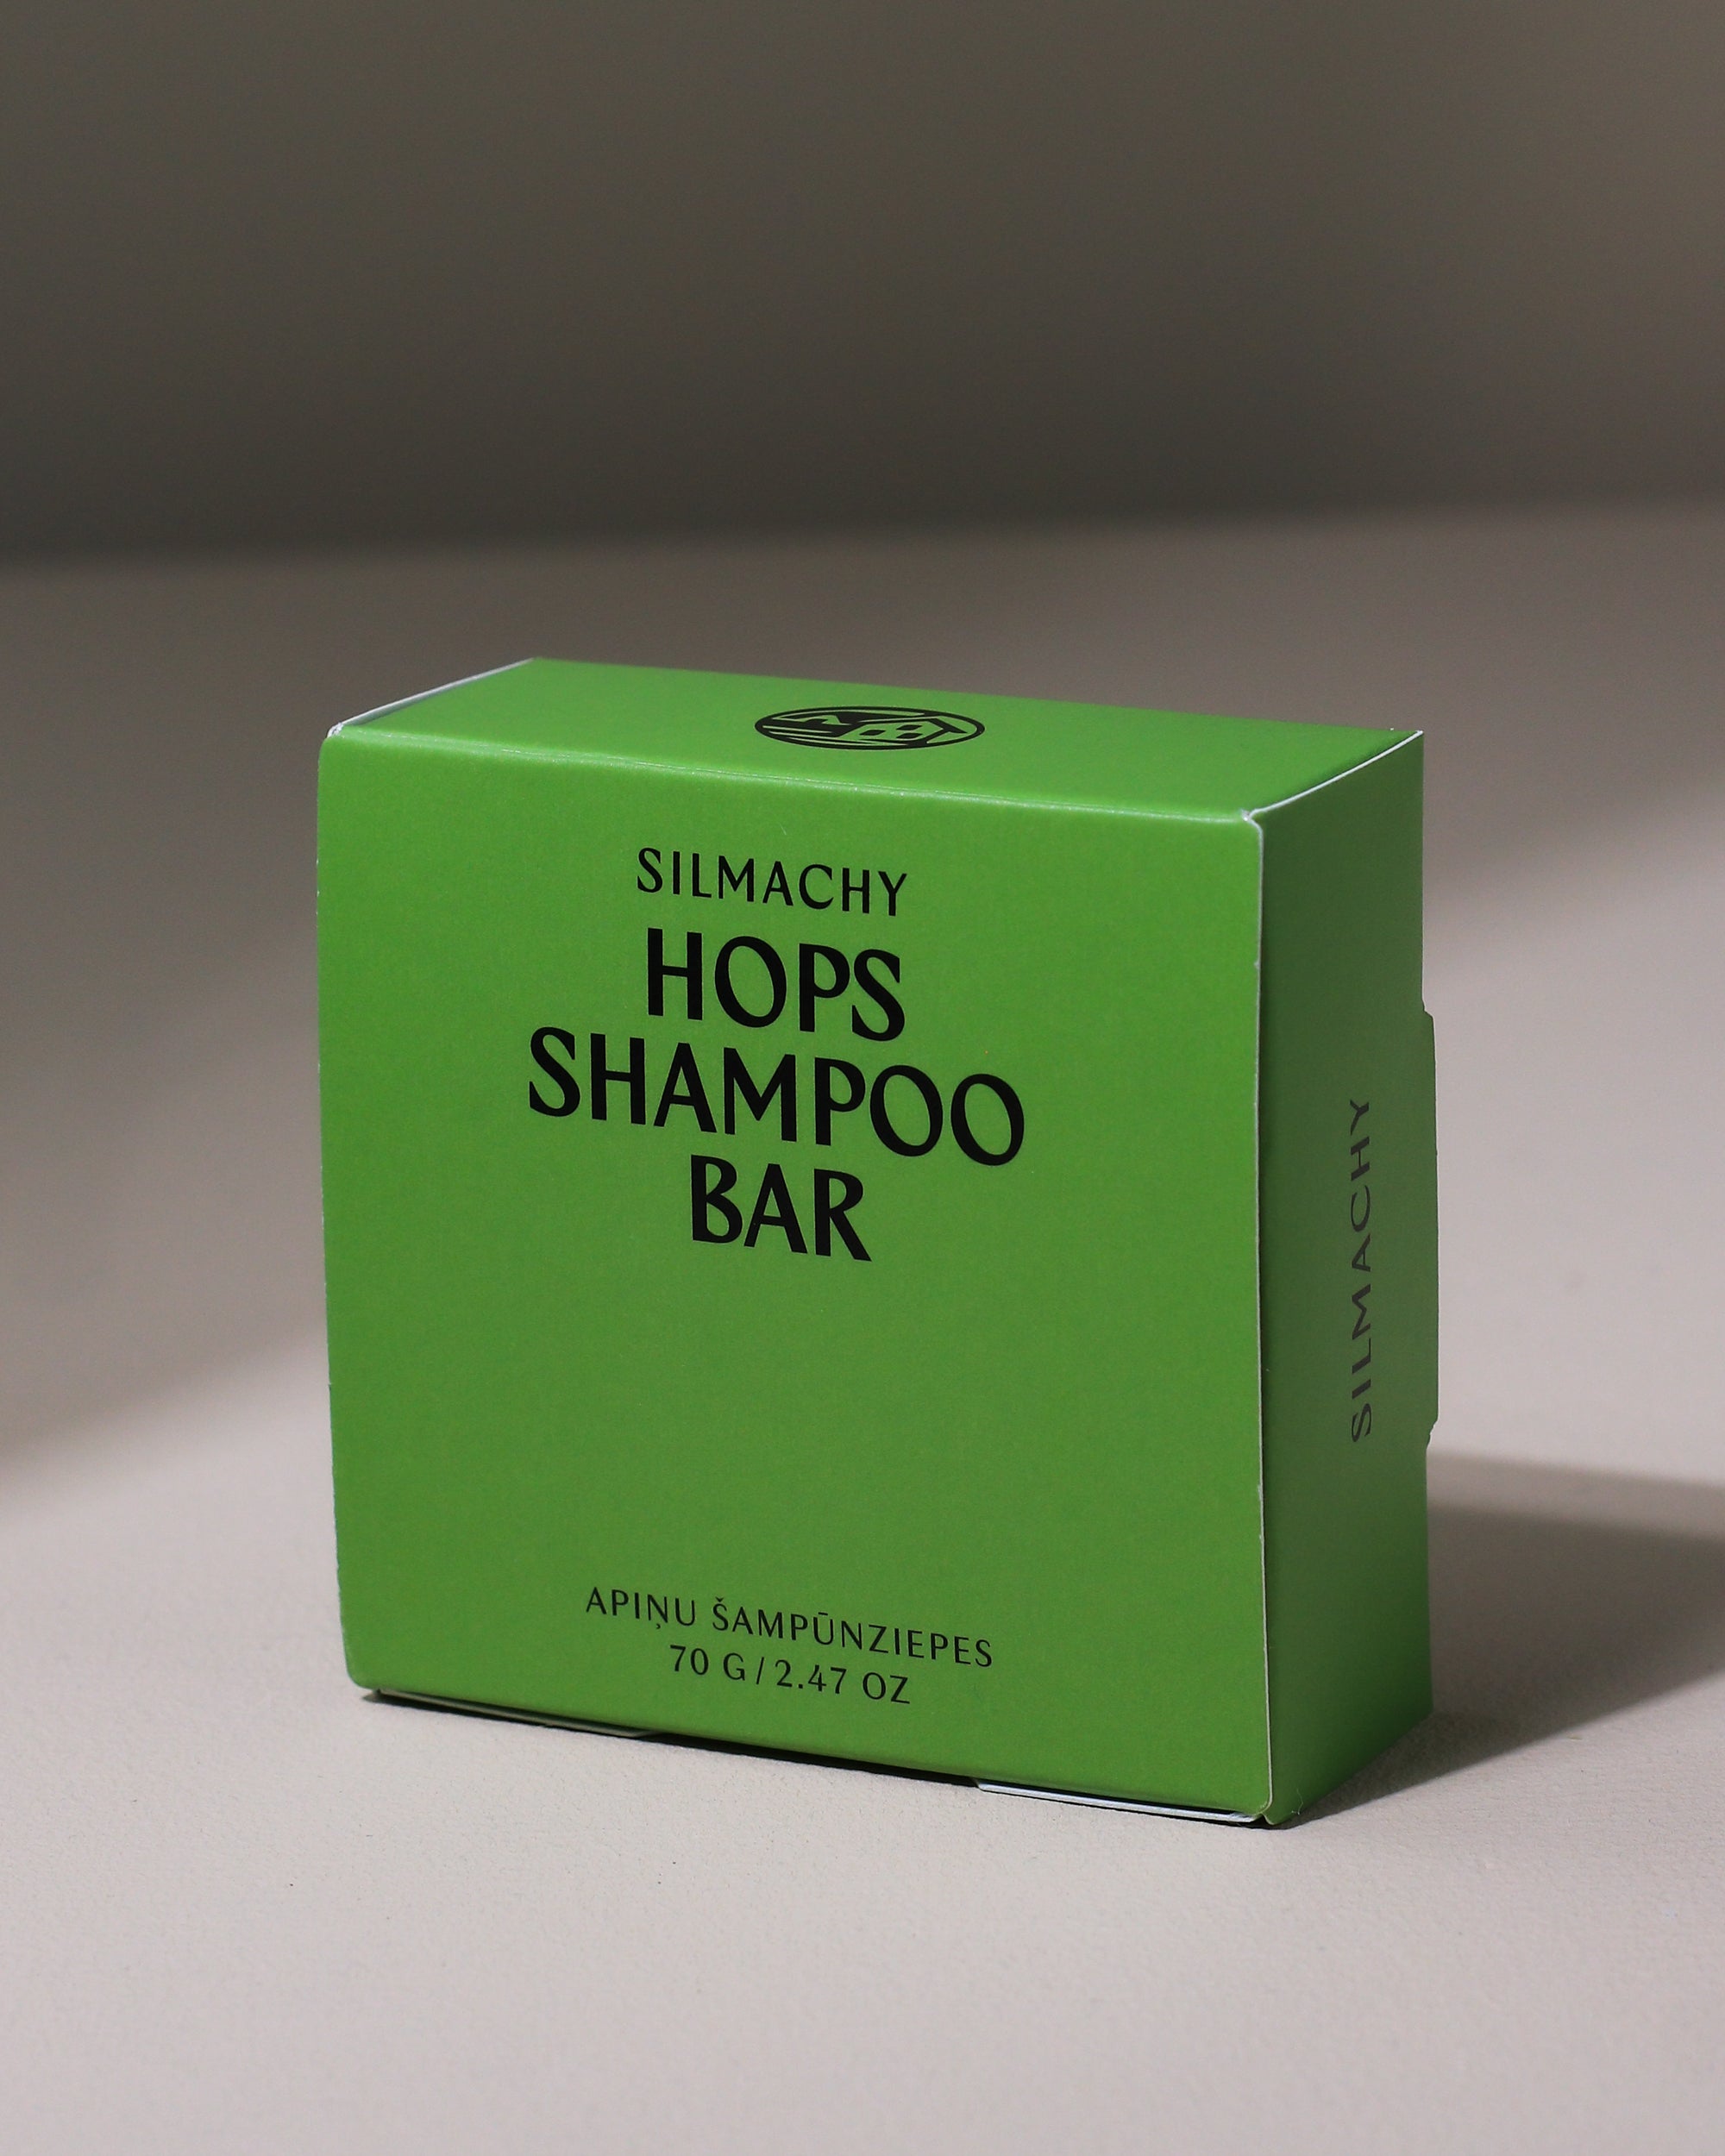 Hops festes Shampoo von Silmachy